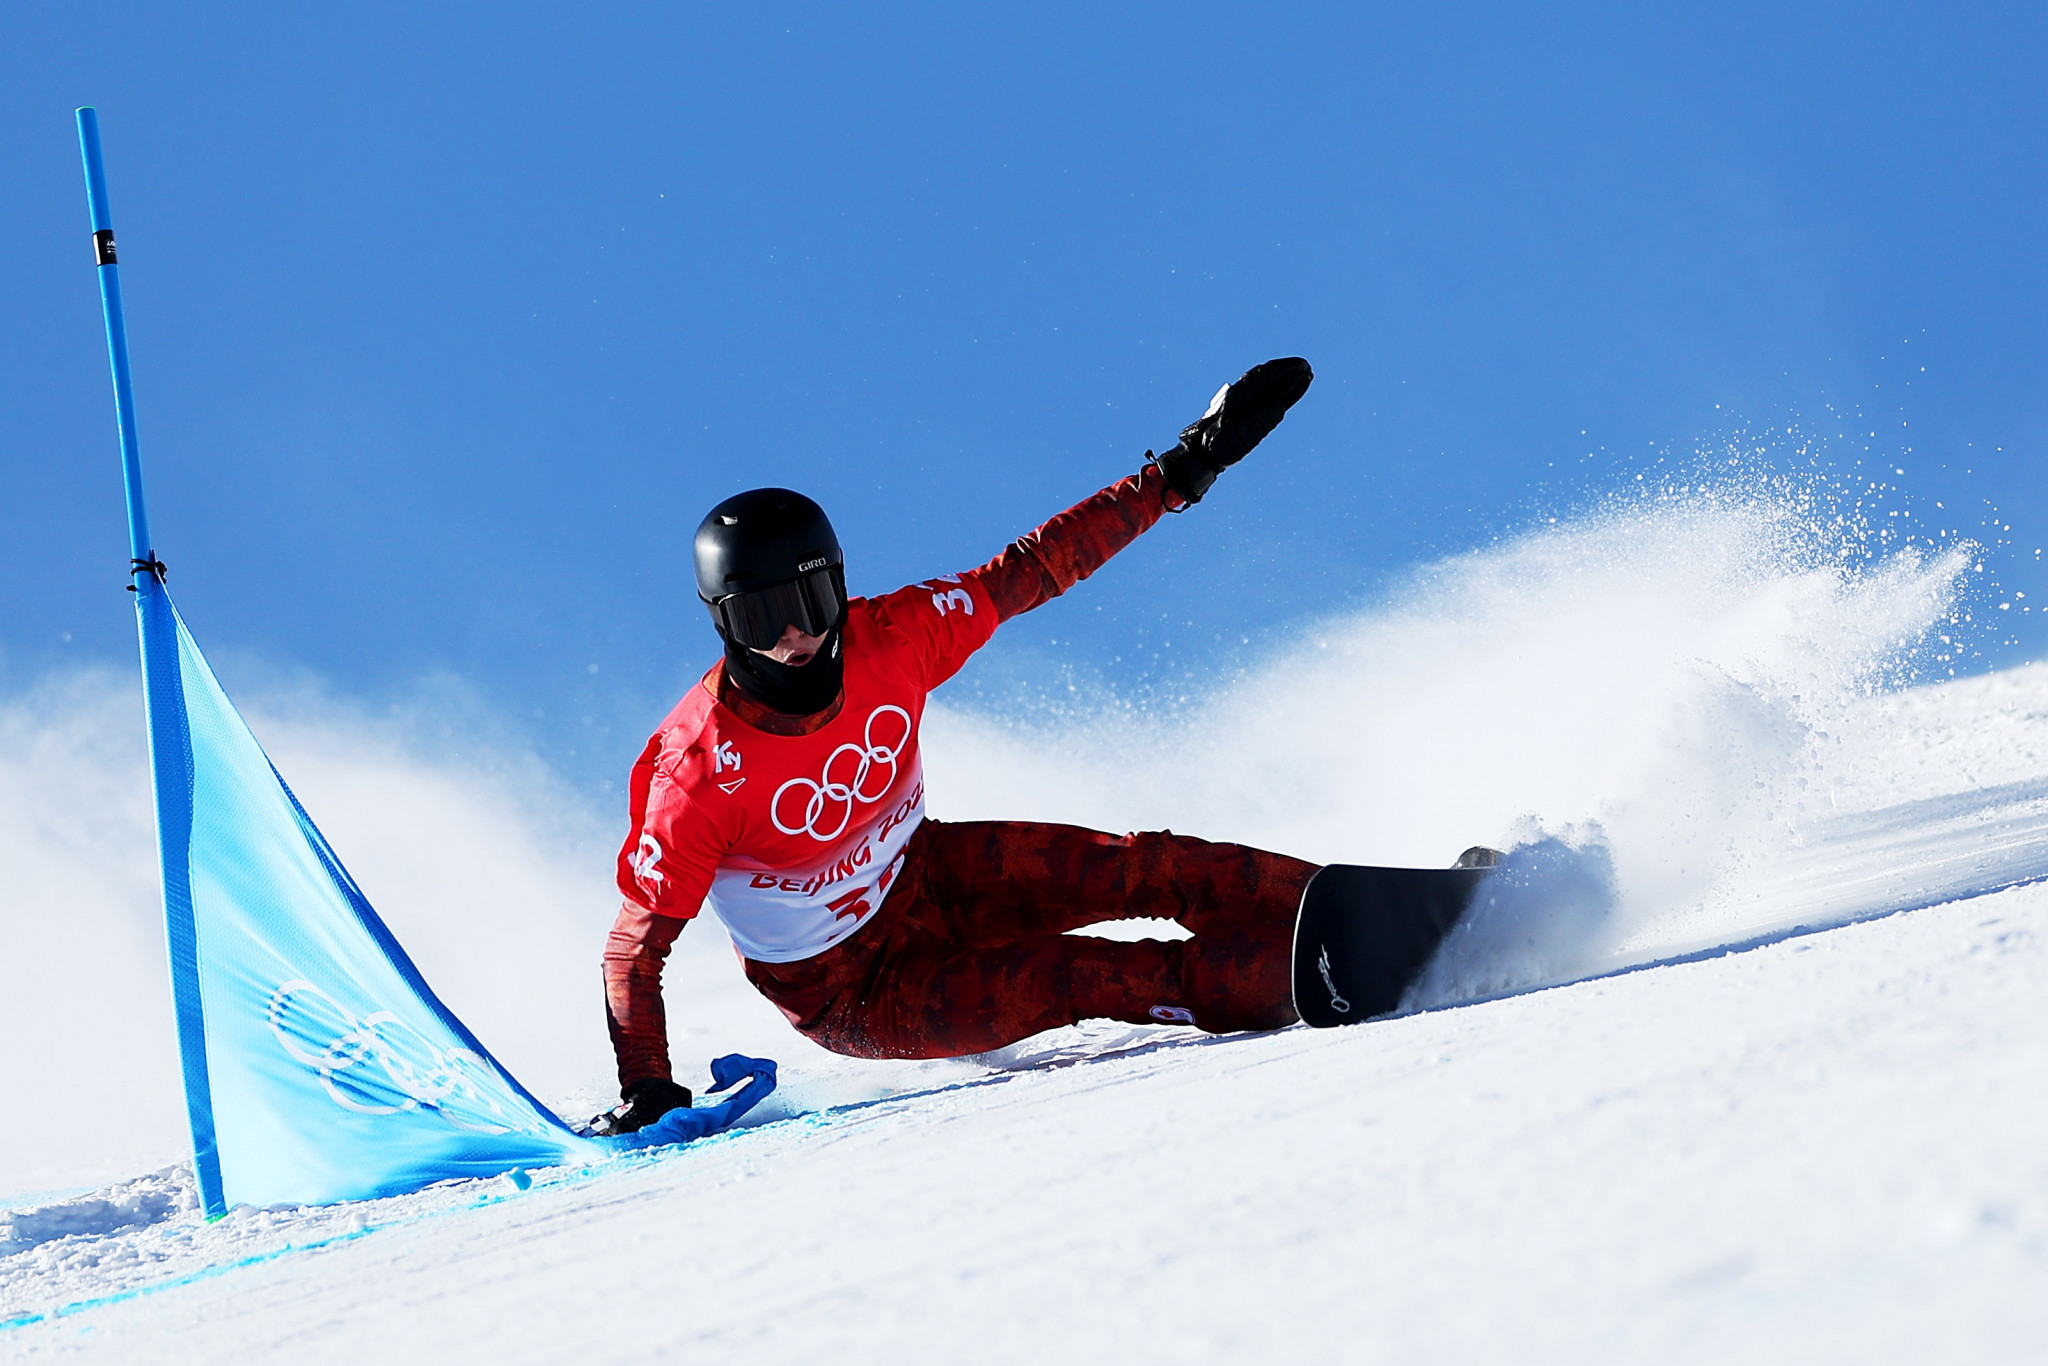 Canada snowboard selection for Beijing 2022 "unreasonable", tribunal rules